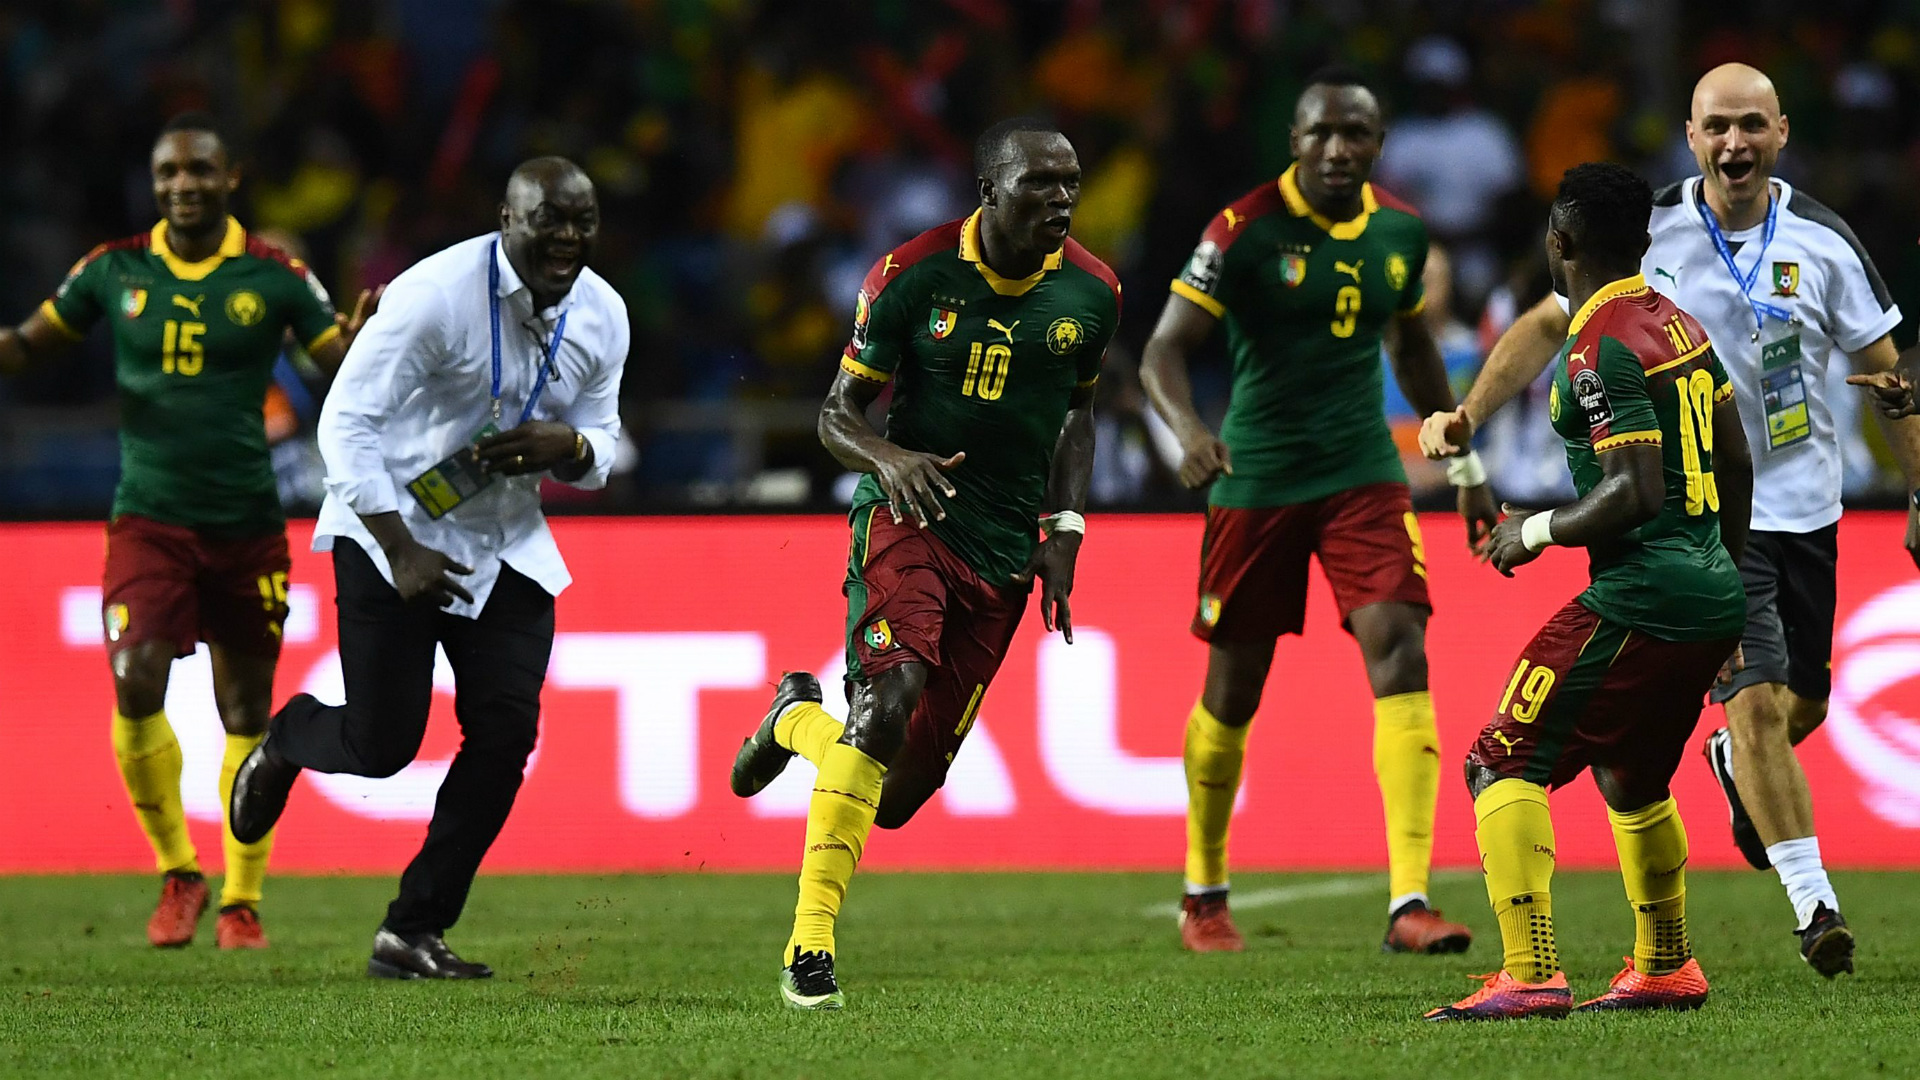 Vincent Aboubakar Egypt Cameroon AFCON 2017 Final - Goal.com1920 x 1080